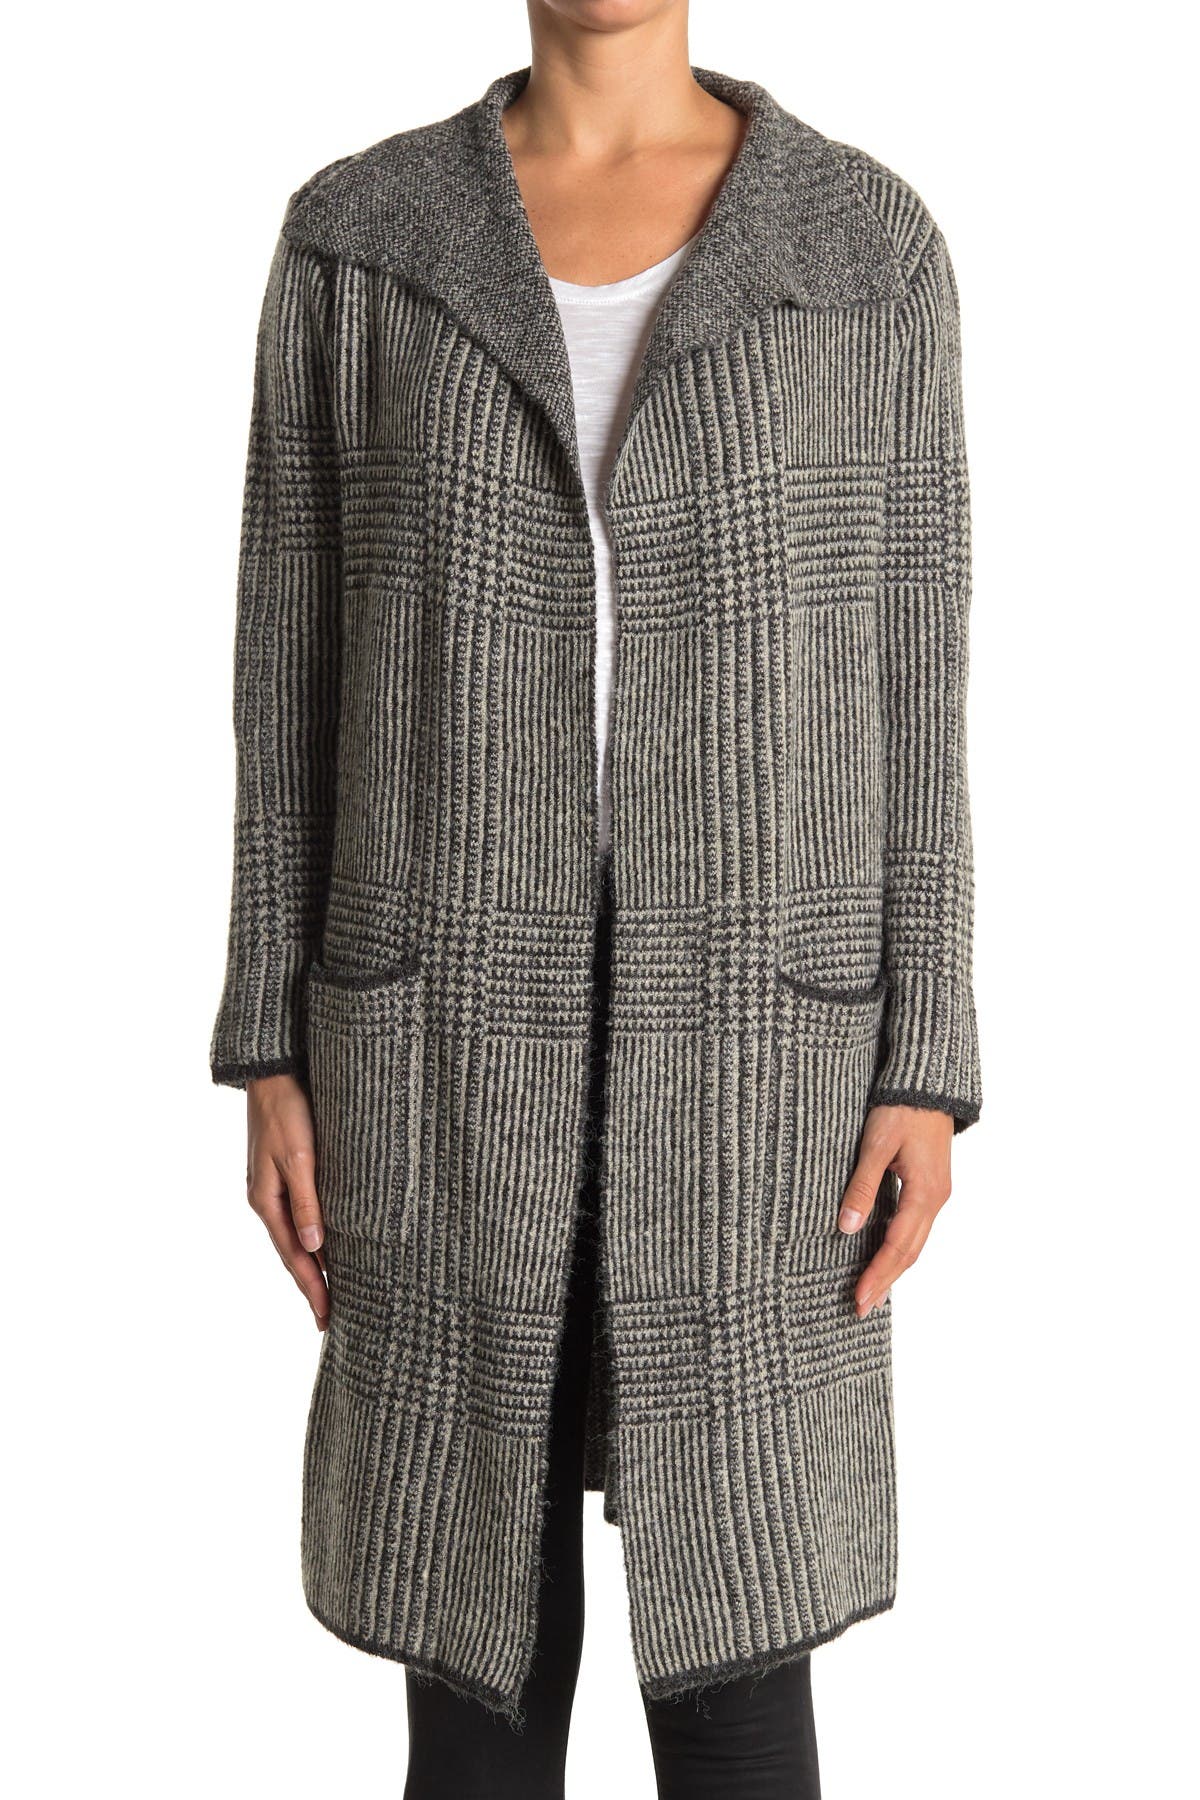 JOSEPH A | Drape Collar Print Maxi Cardigan Sweater Coat | Nordstrom Rack